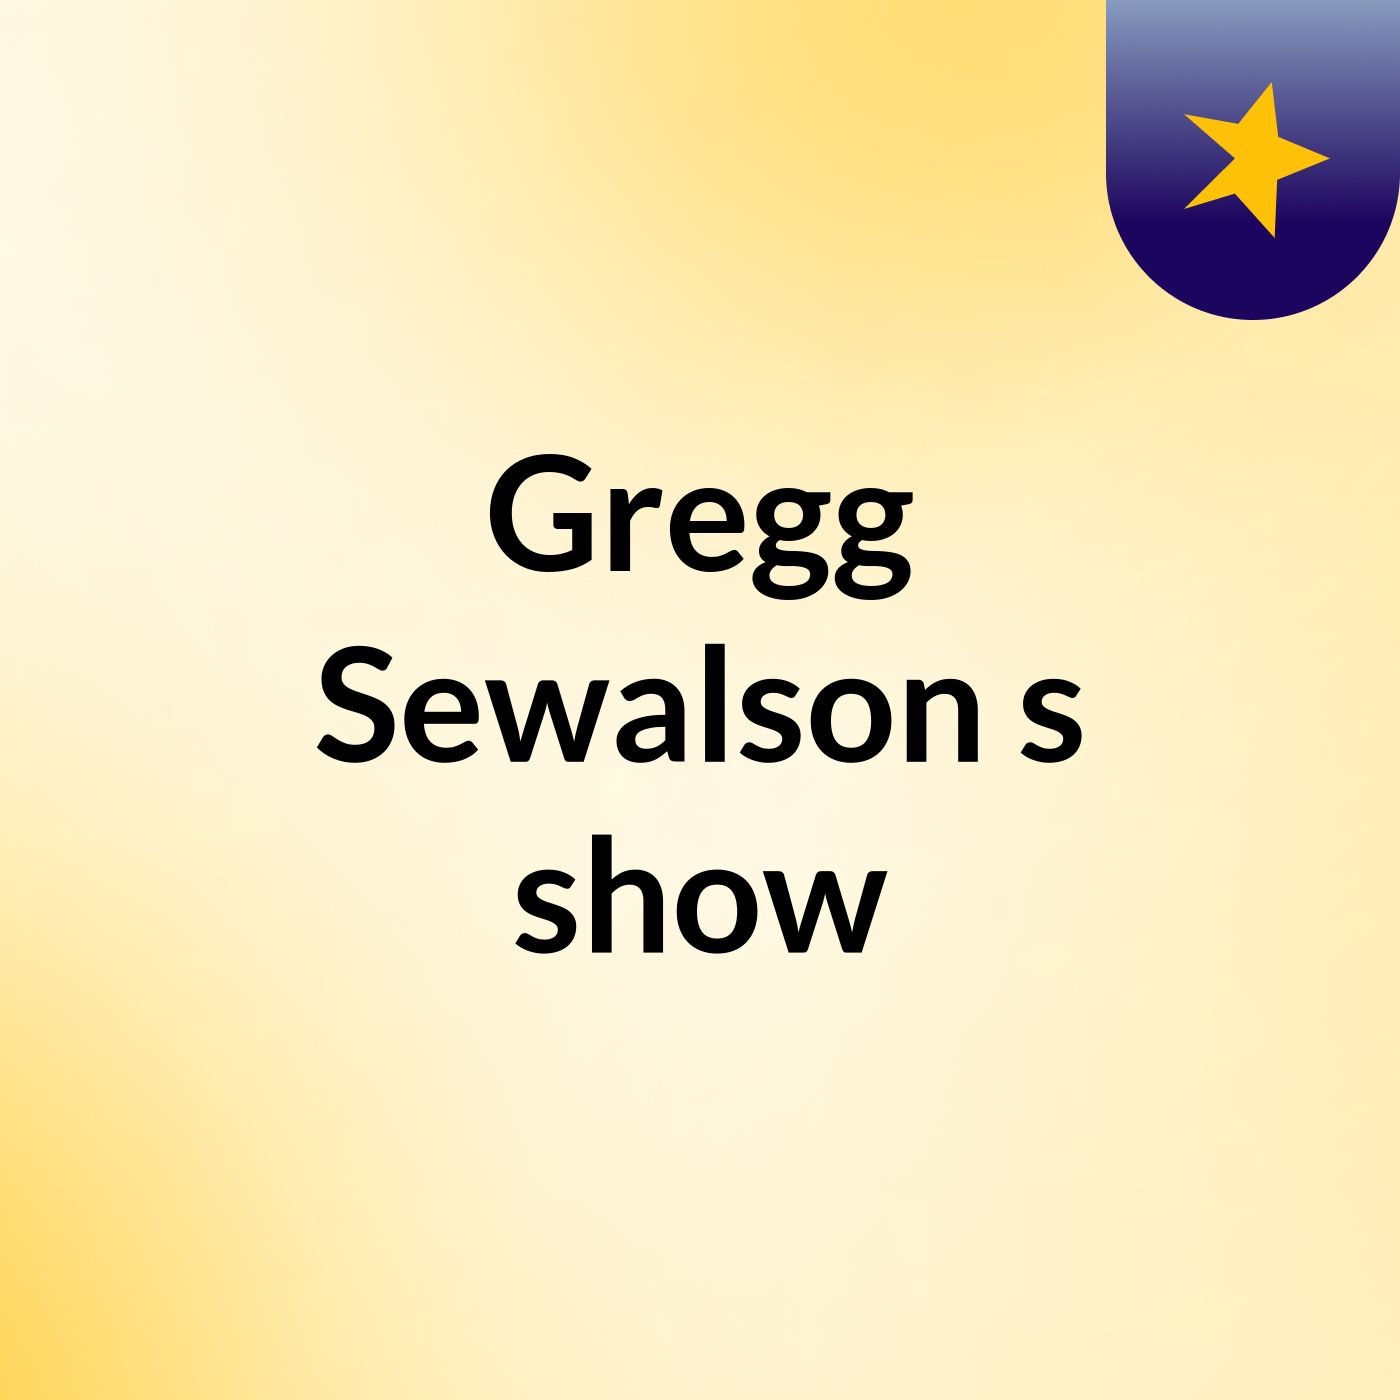 Gregg Sewalson's show